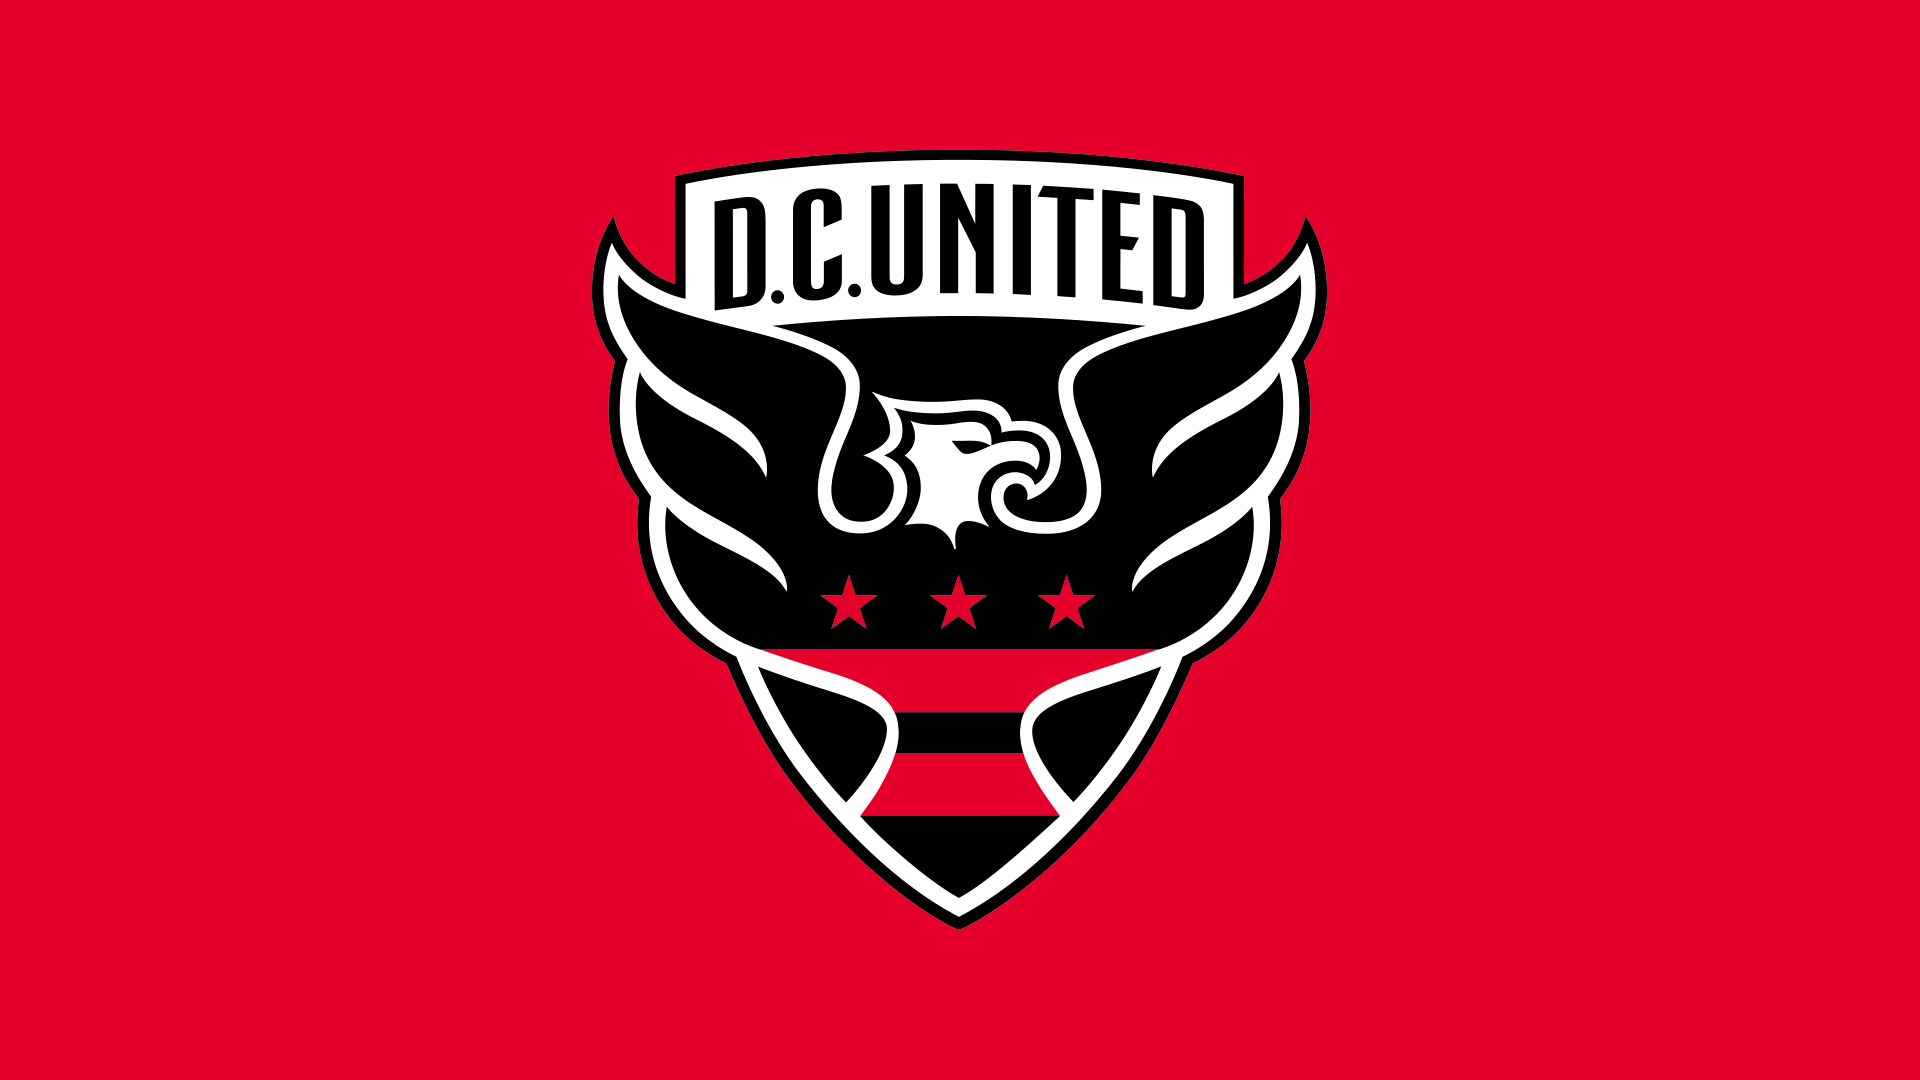 D.C. United vs. Austin FC